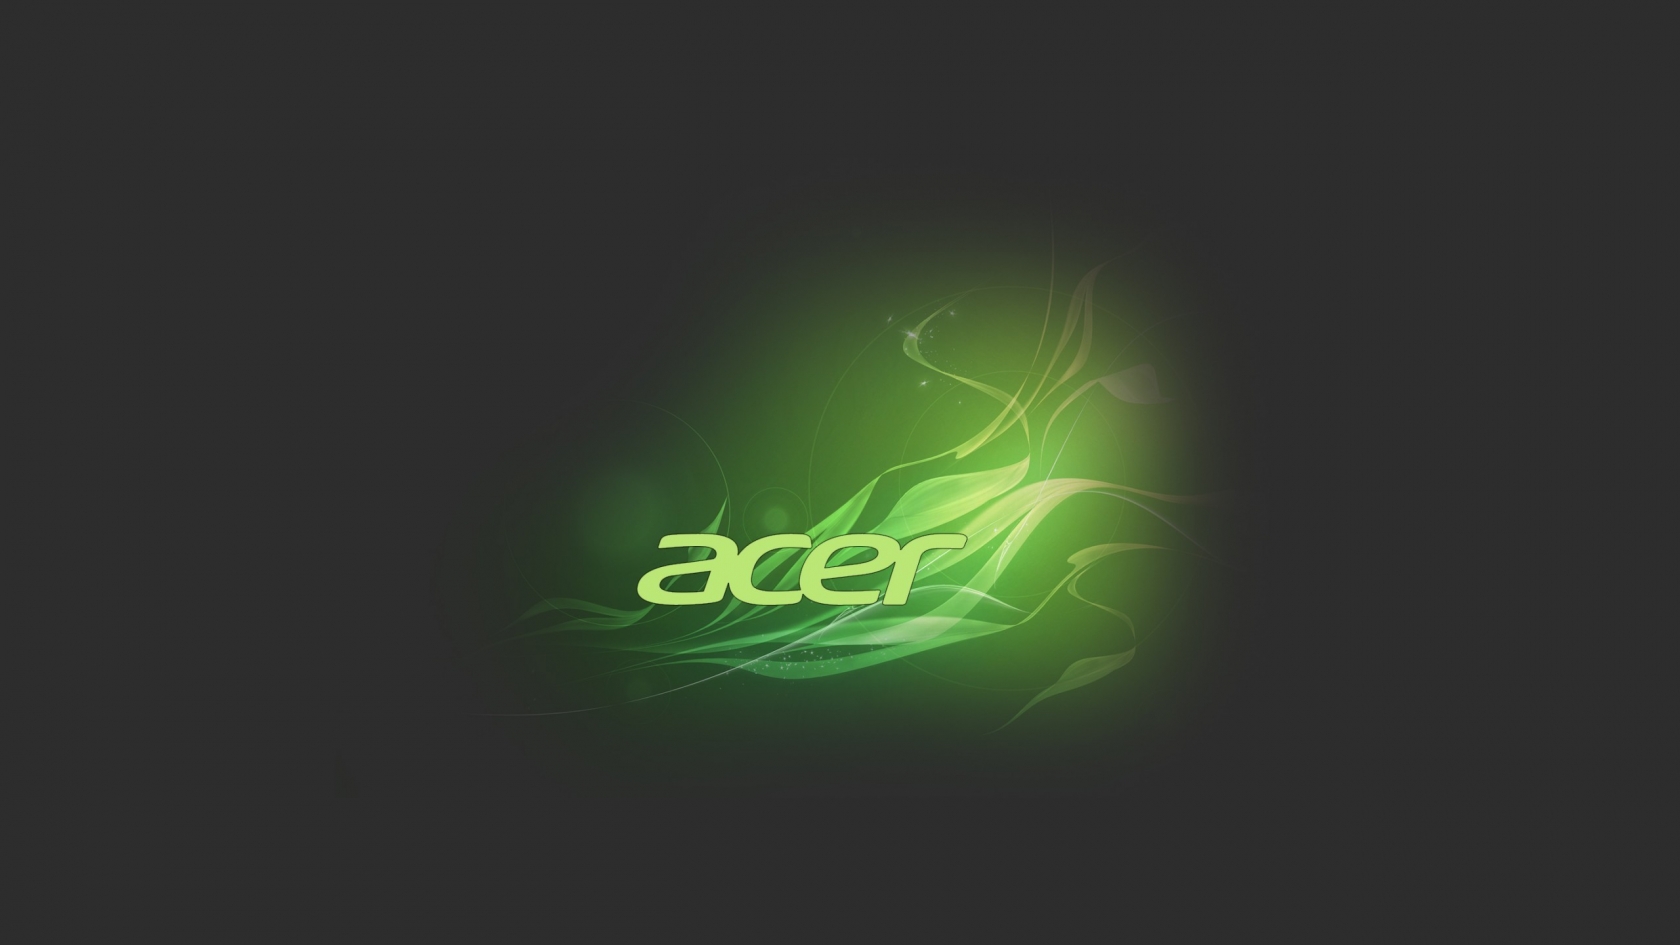 Acer Floral for 1680 x 945 HDTV resolution